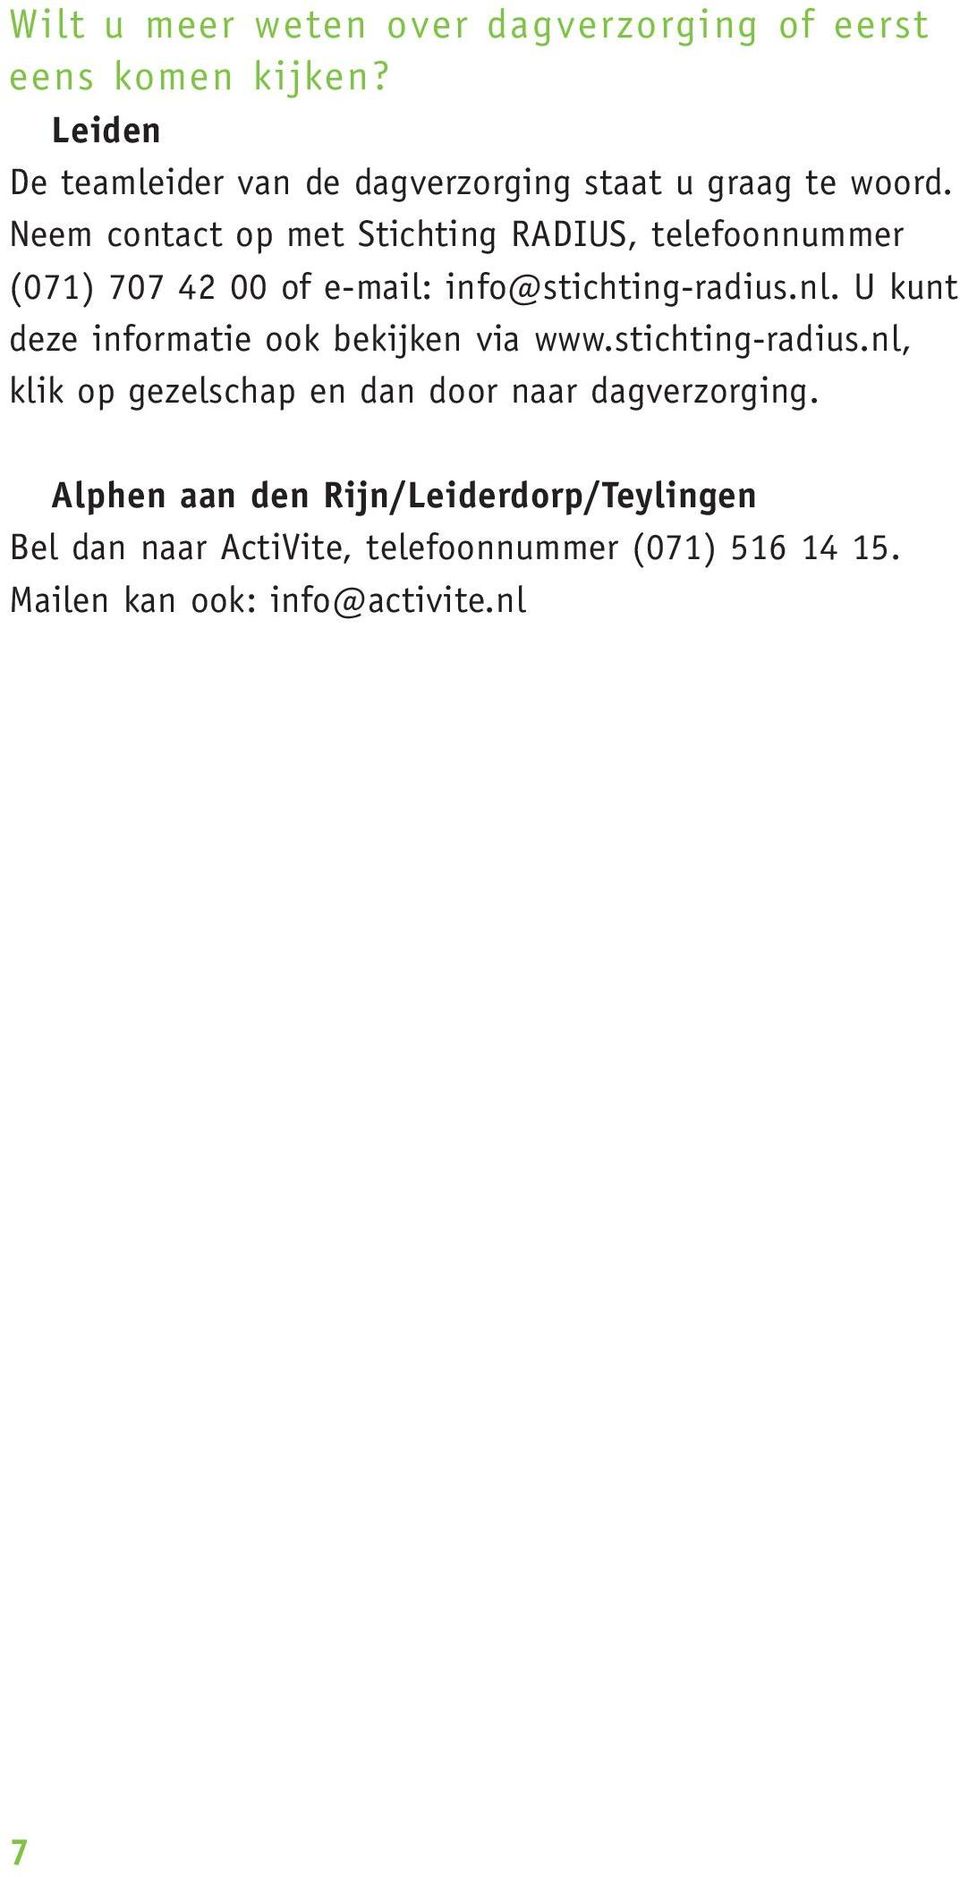 Neem contact op met Stichting RADIUS, telefoonnummer (071) 707 42 00 of e-mail: info@stichting-radius.nl.